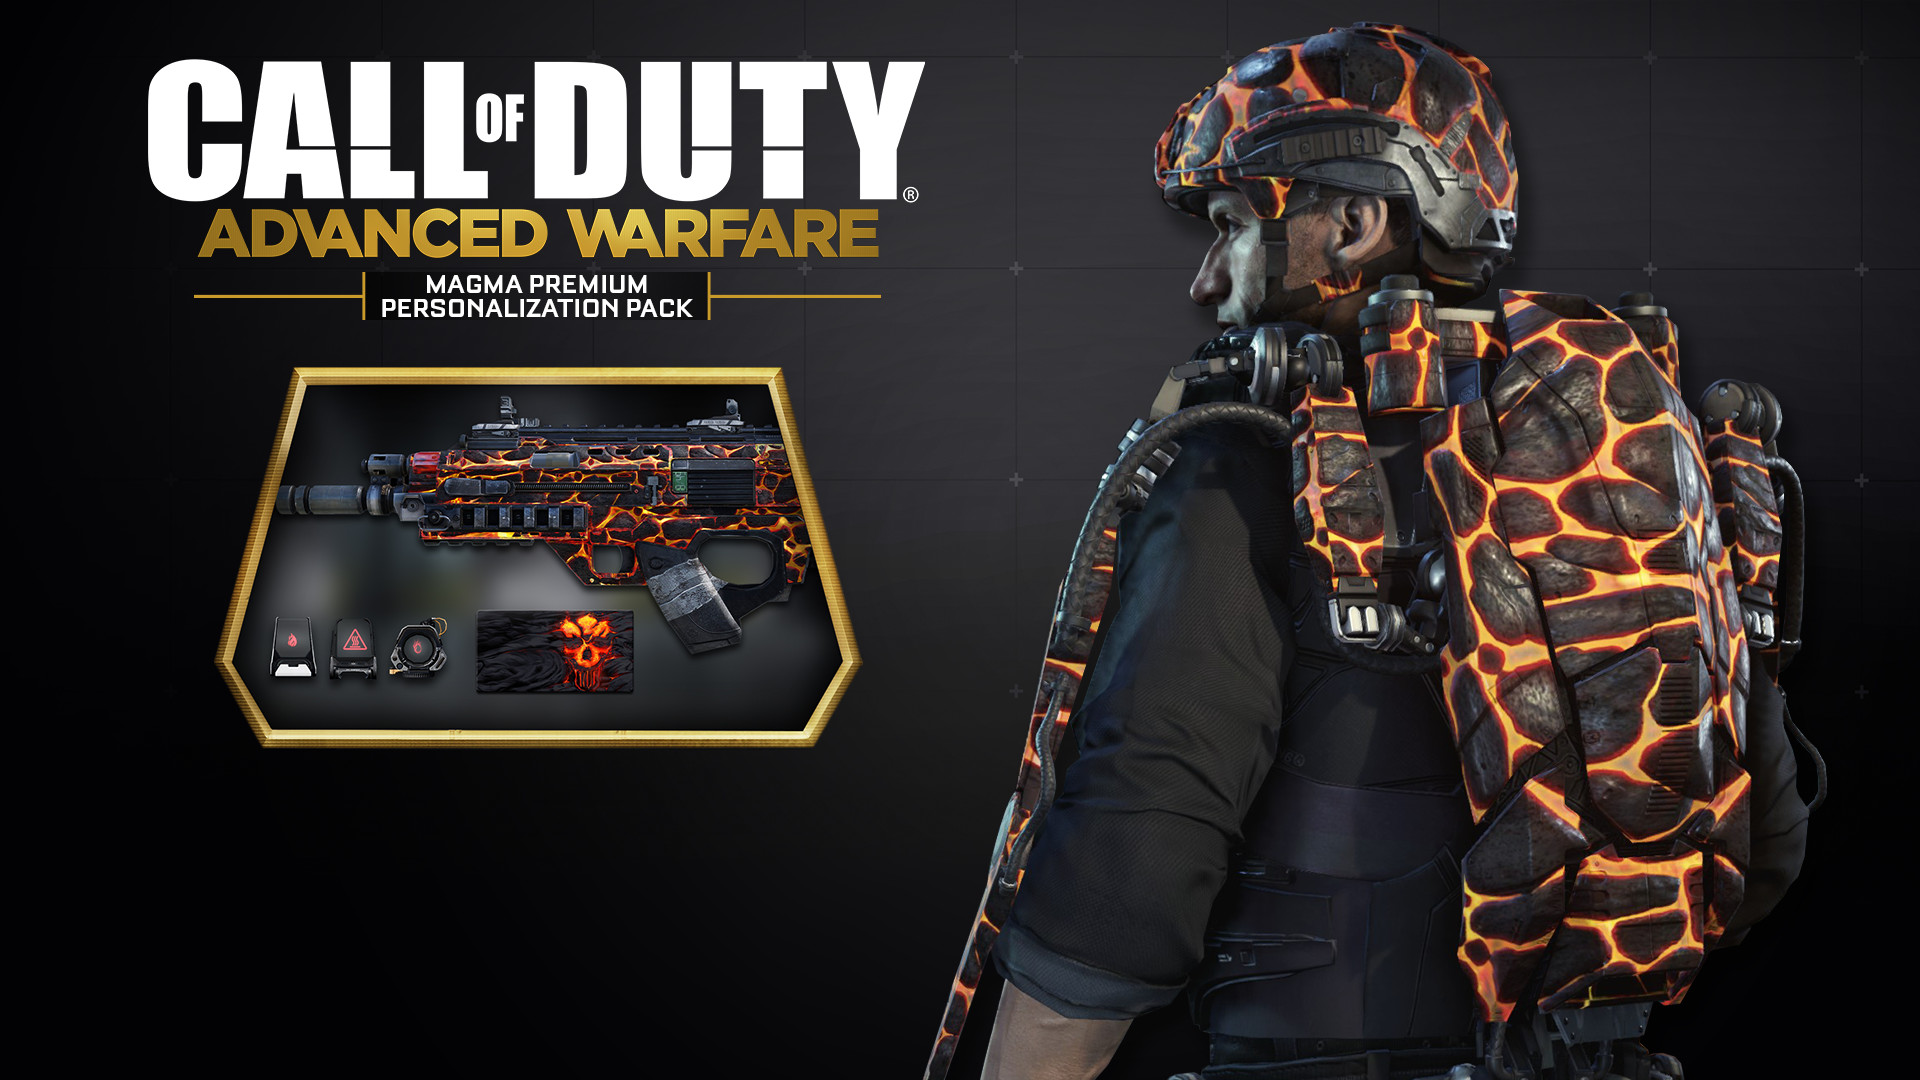 Call of Duty®: Advanced Warfare - Magma Premium Personalization Pack Featured Screenshot #1